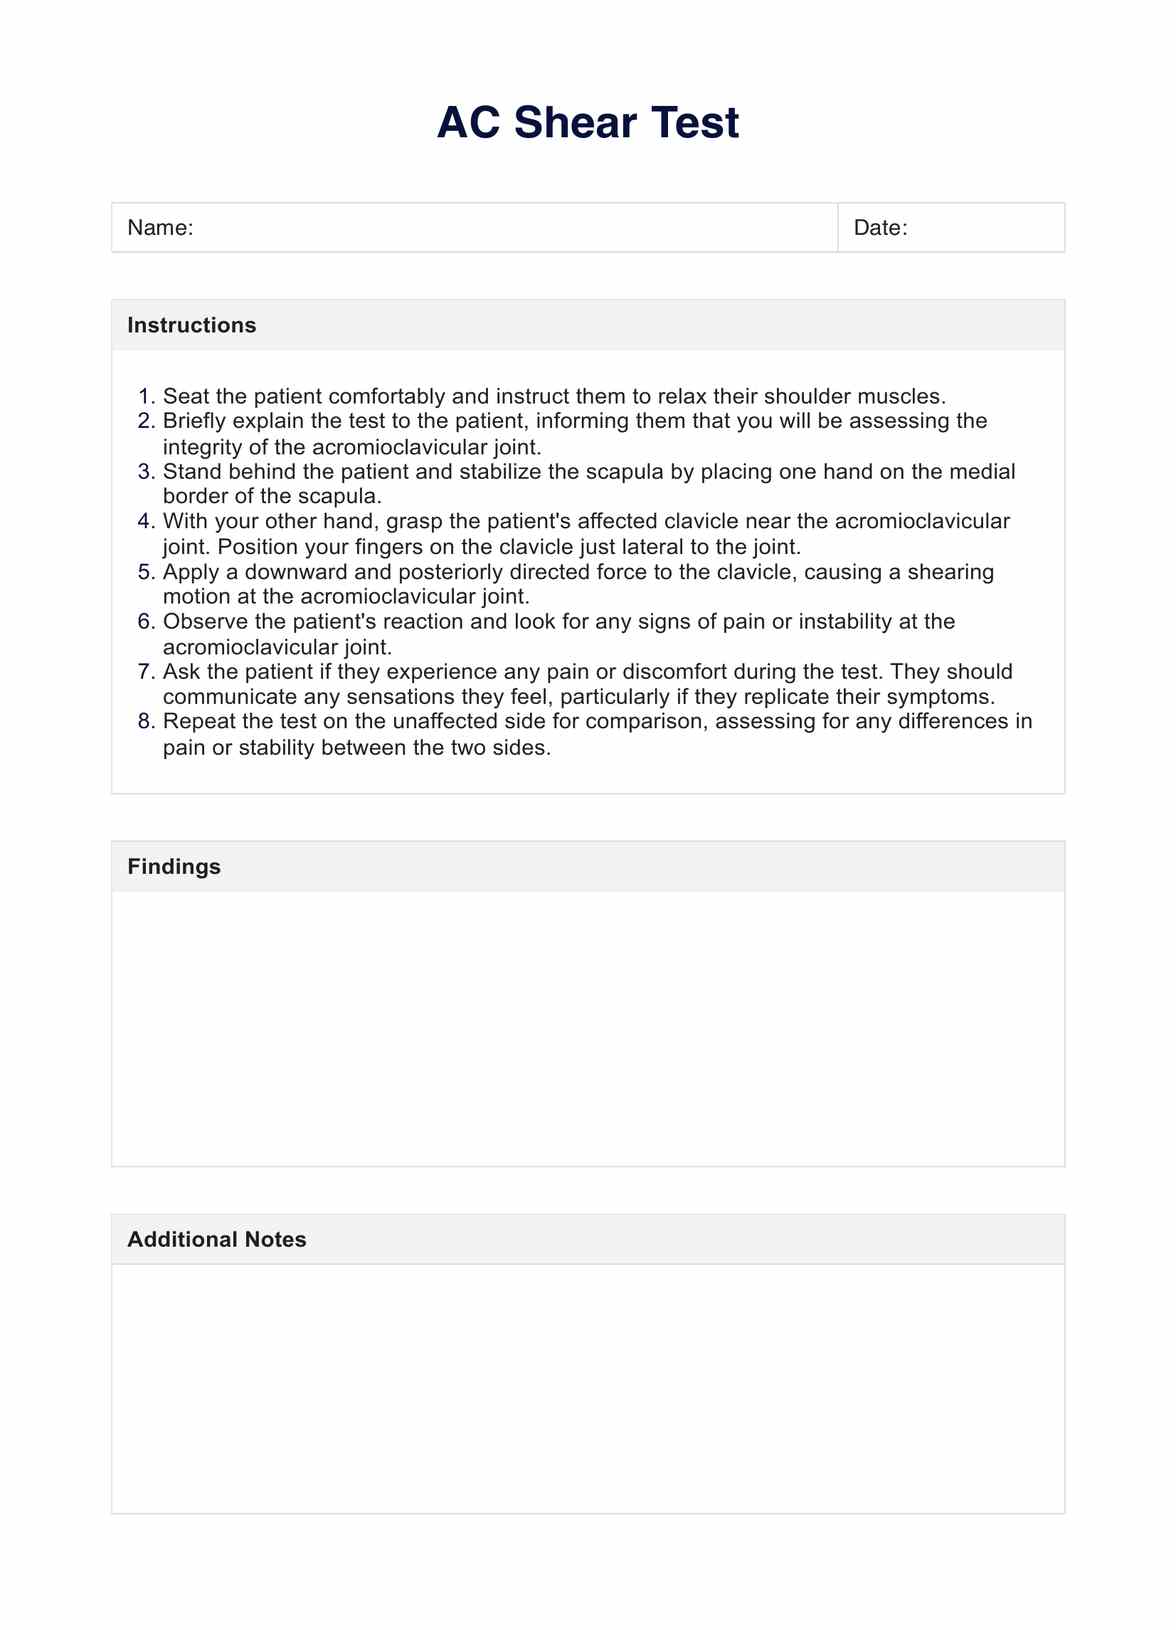 AC Shear Test PDF Example